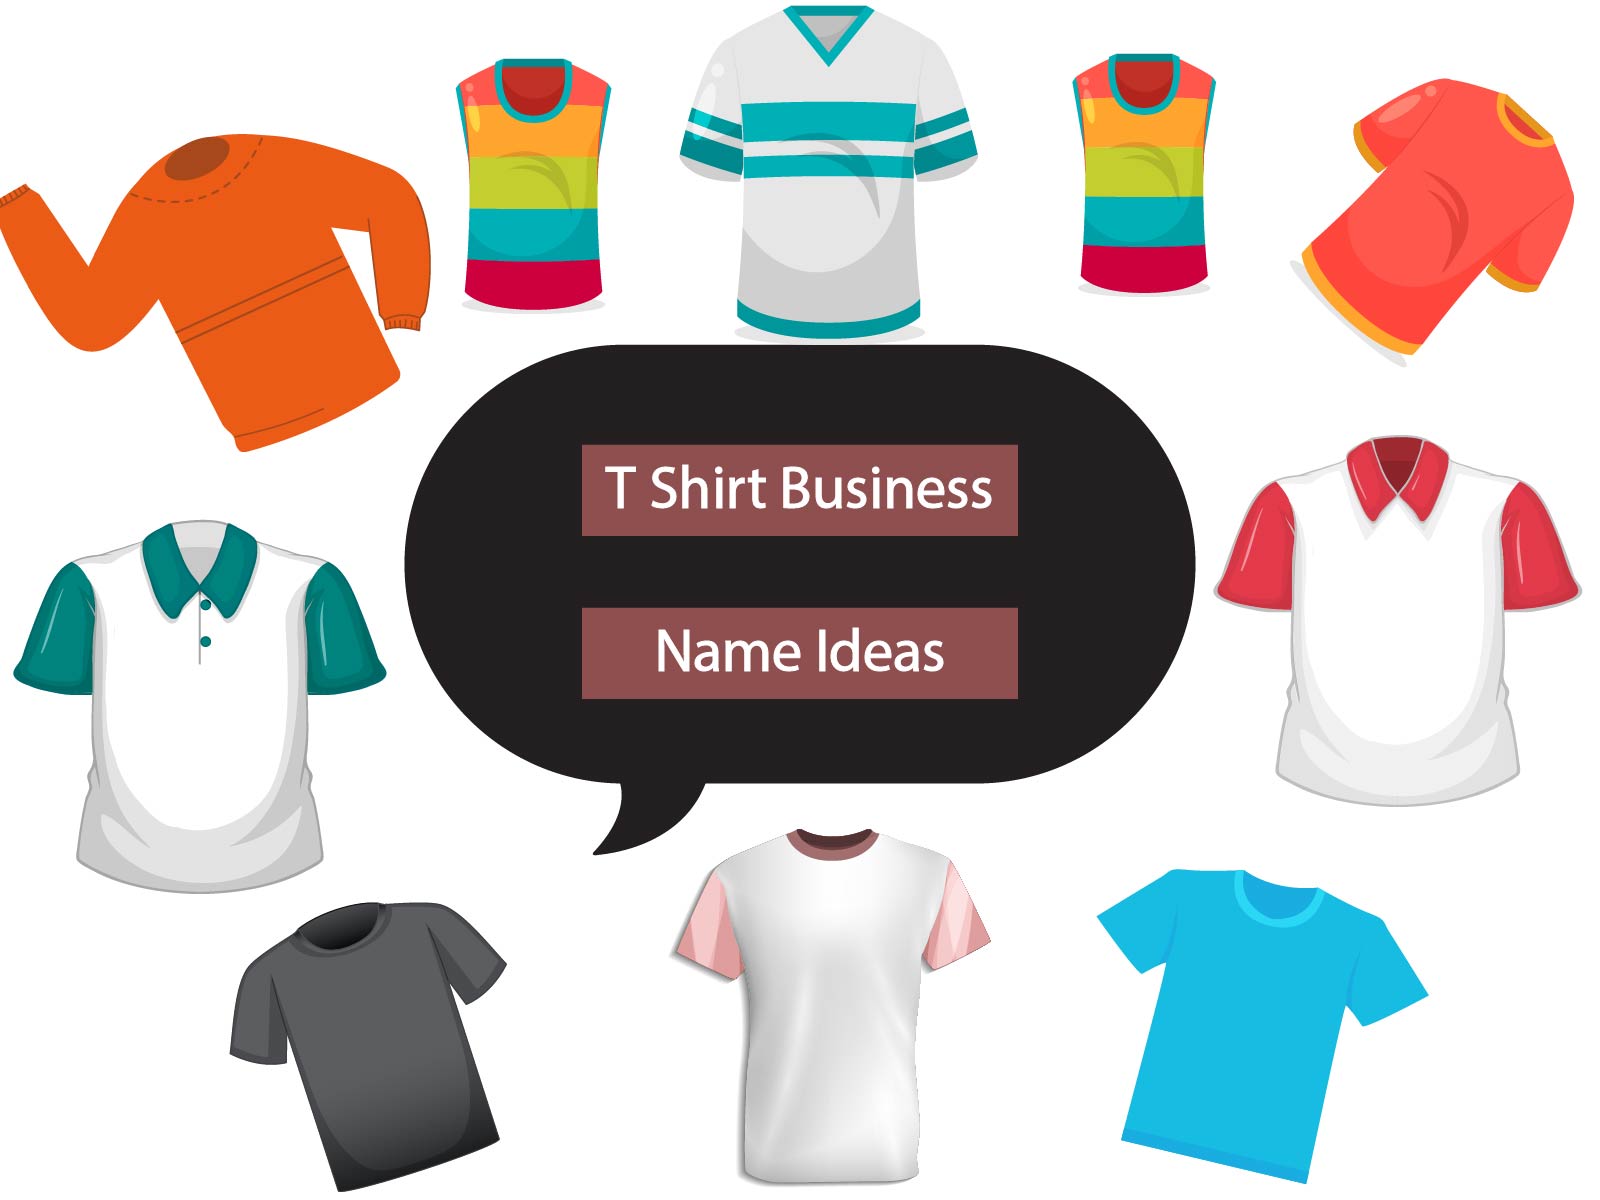 T Shirt Business Name Ideas